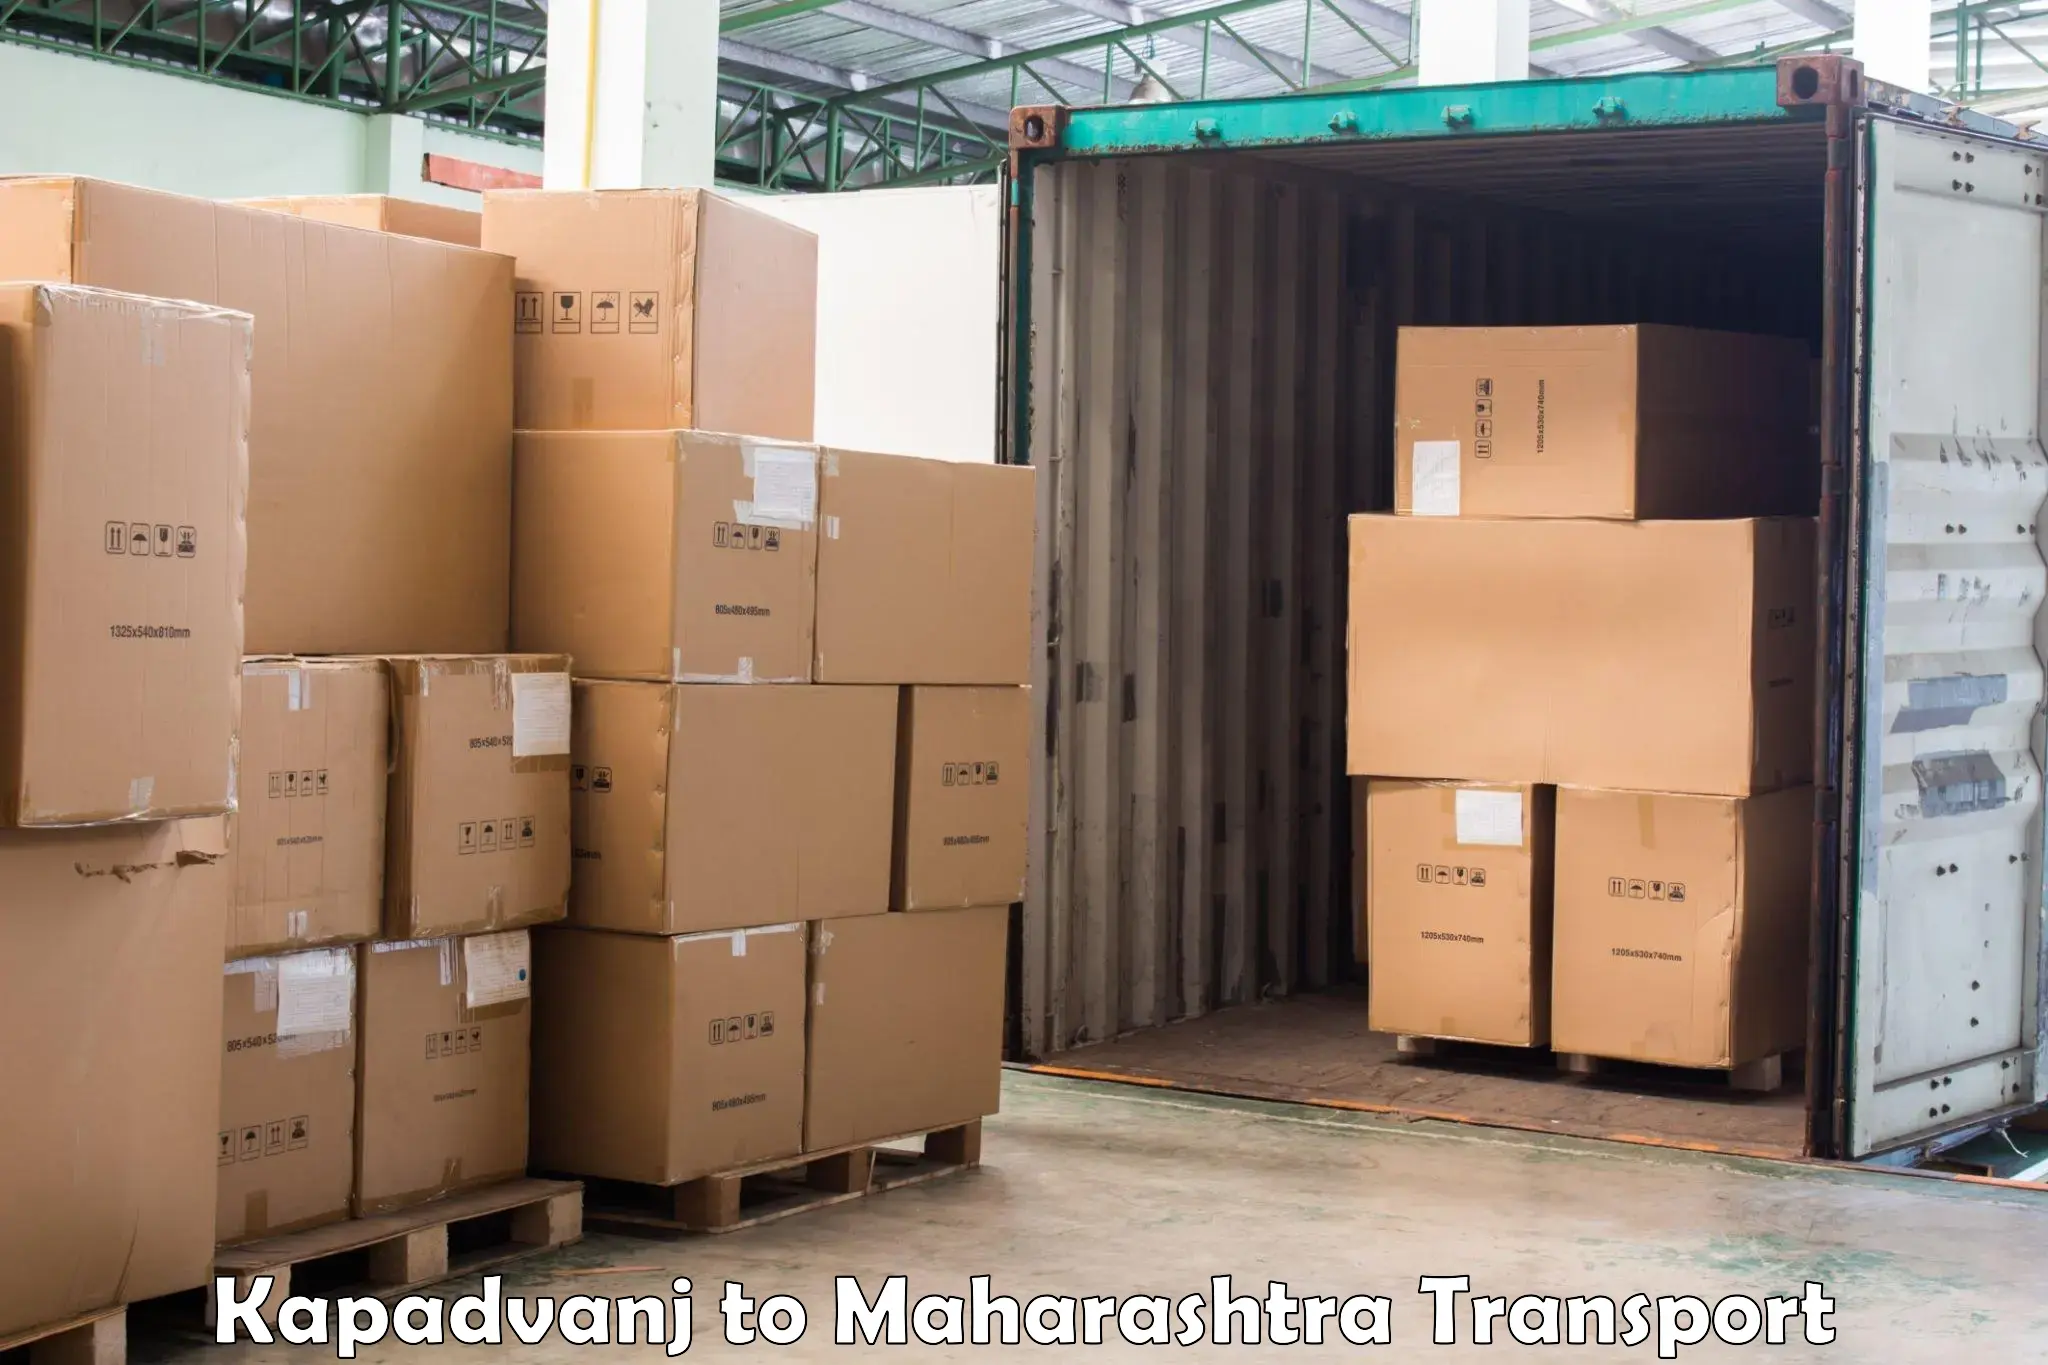 Truck transport companies in India Kapadvanj to Bhiwandi